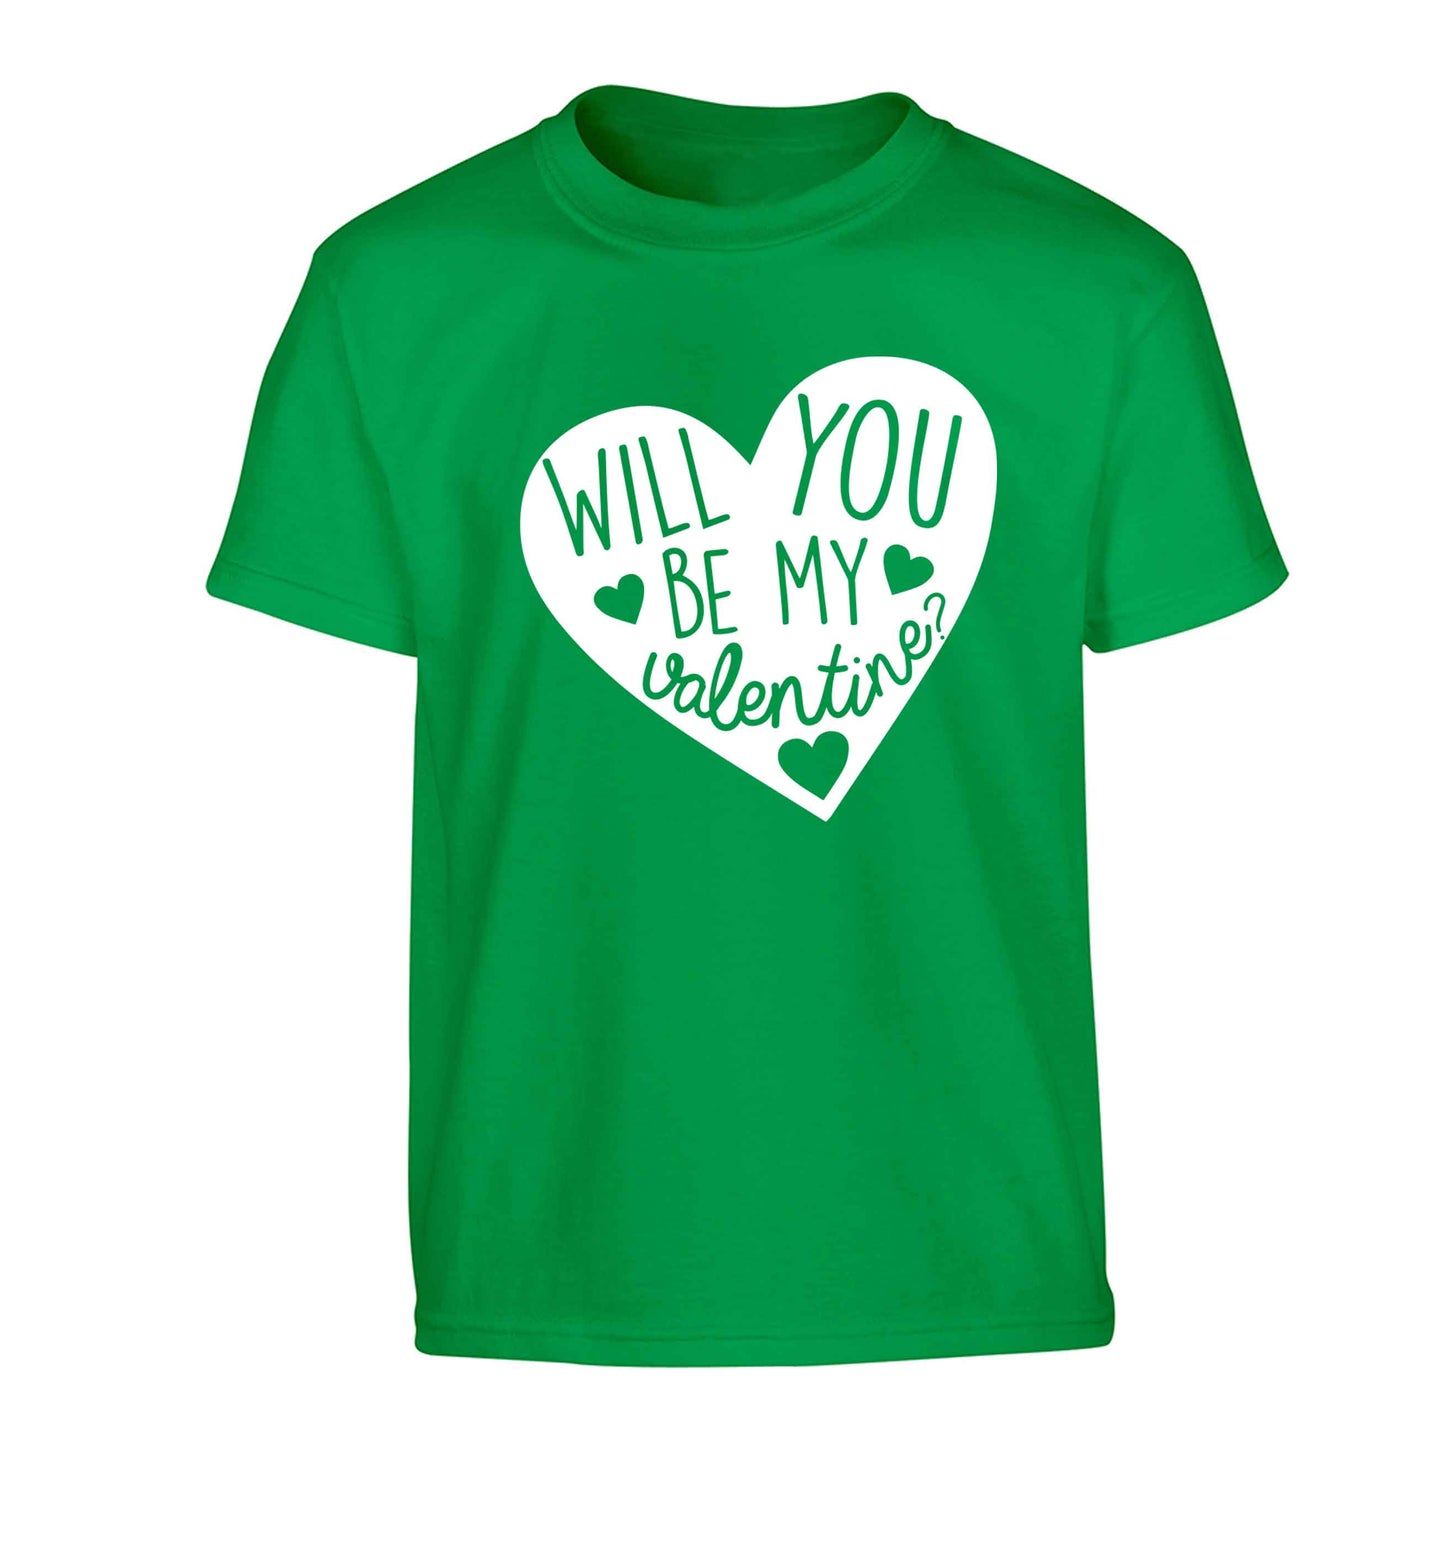 Will you be my valentine? Children's green Tshirt 12-13 Years